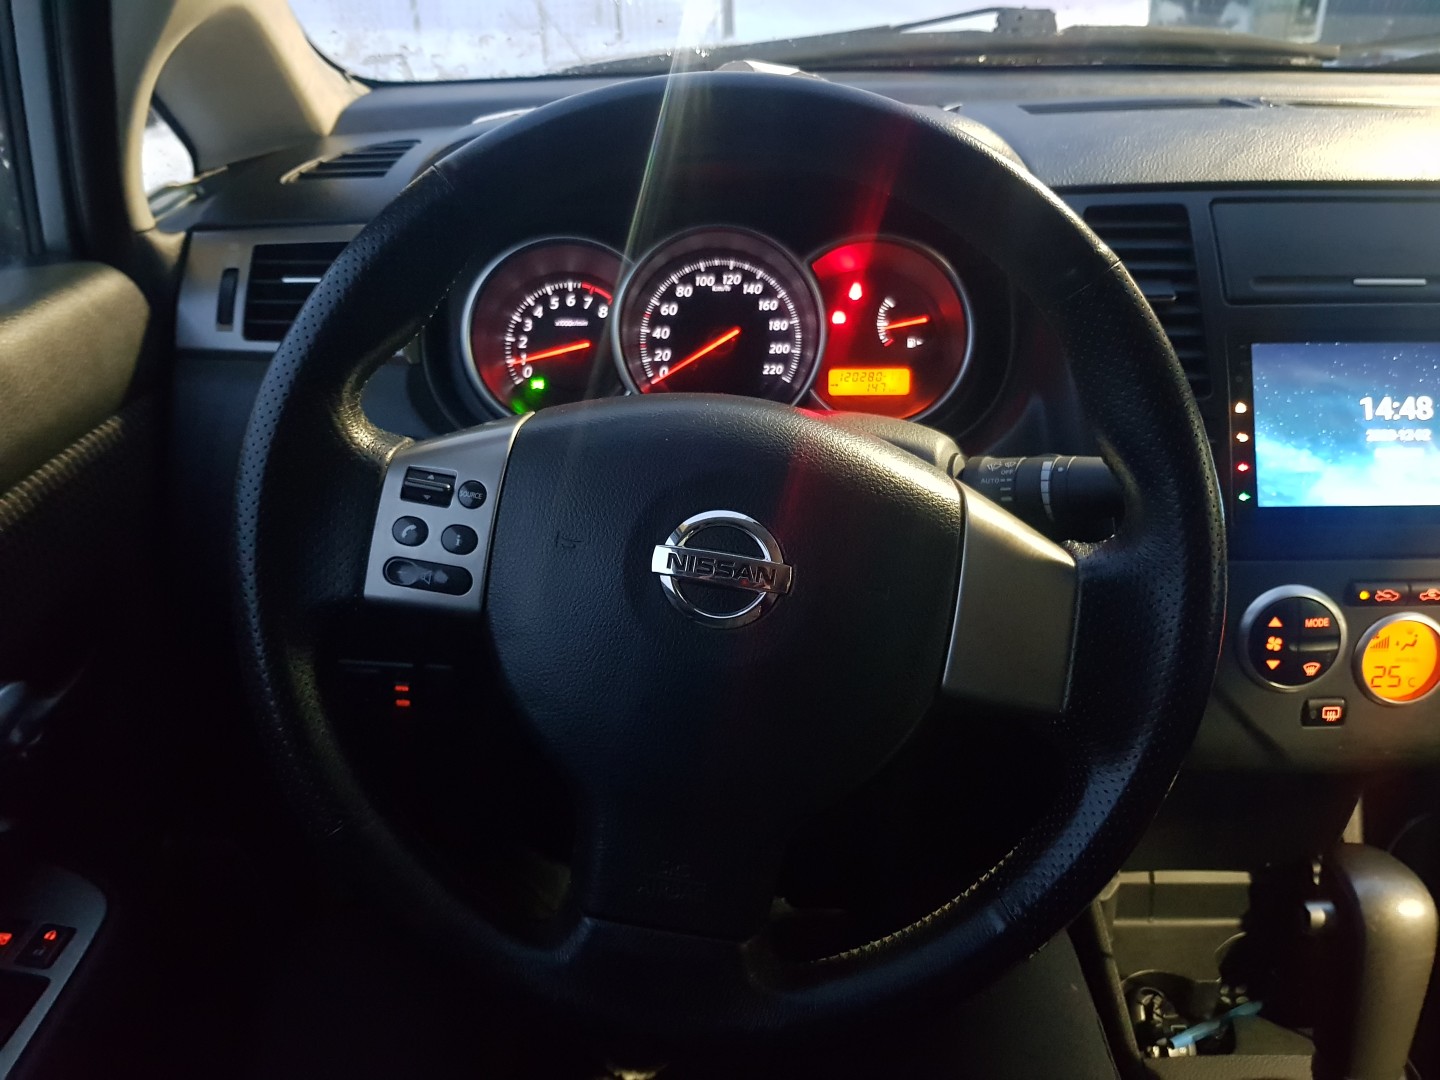 Nissan Tiida, 2011 г.в., пробег 114 700 км, цена, фото, Мурманск